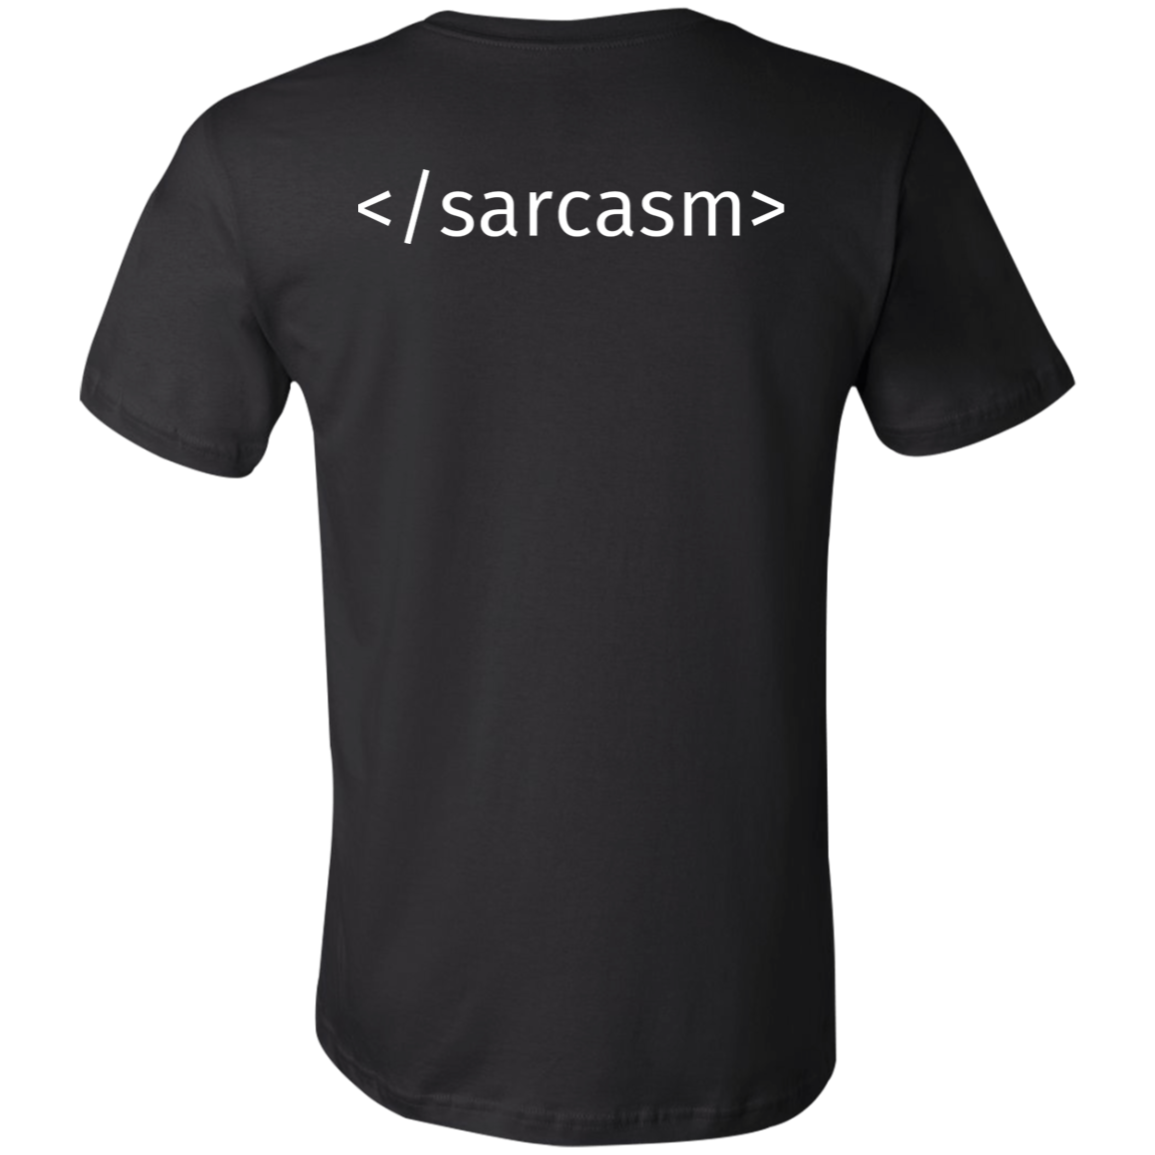 Sarcasm Tag Short-Sleeve T-Shirt